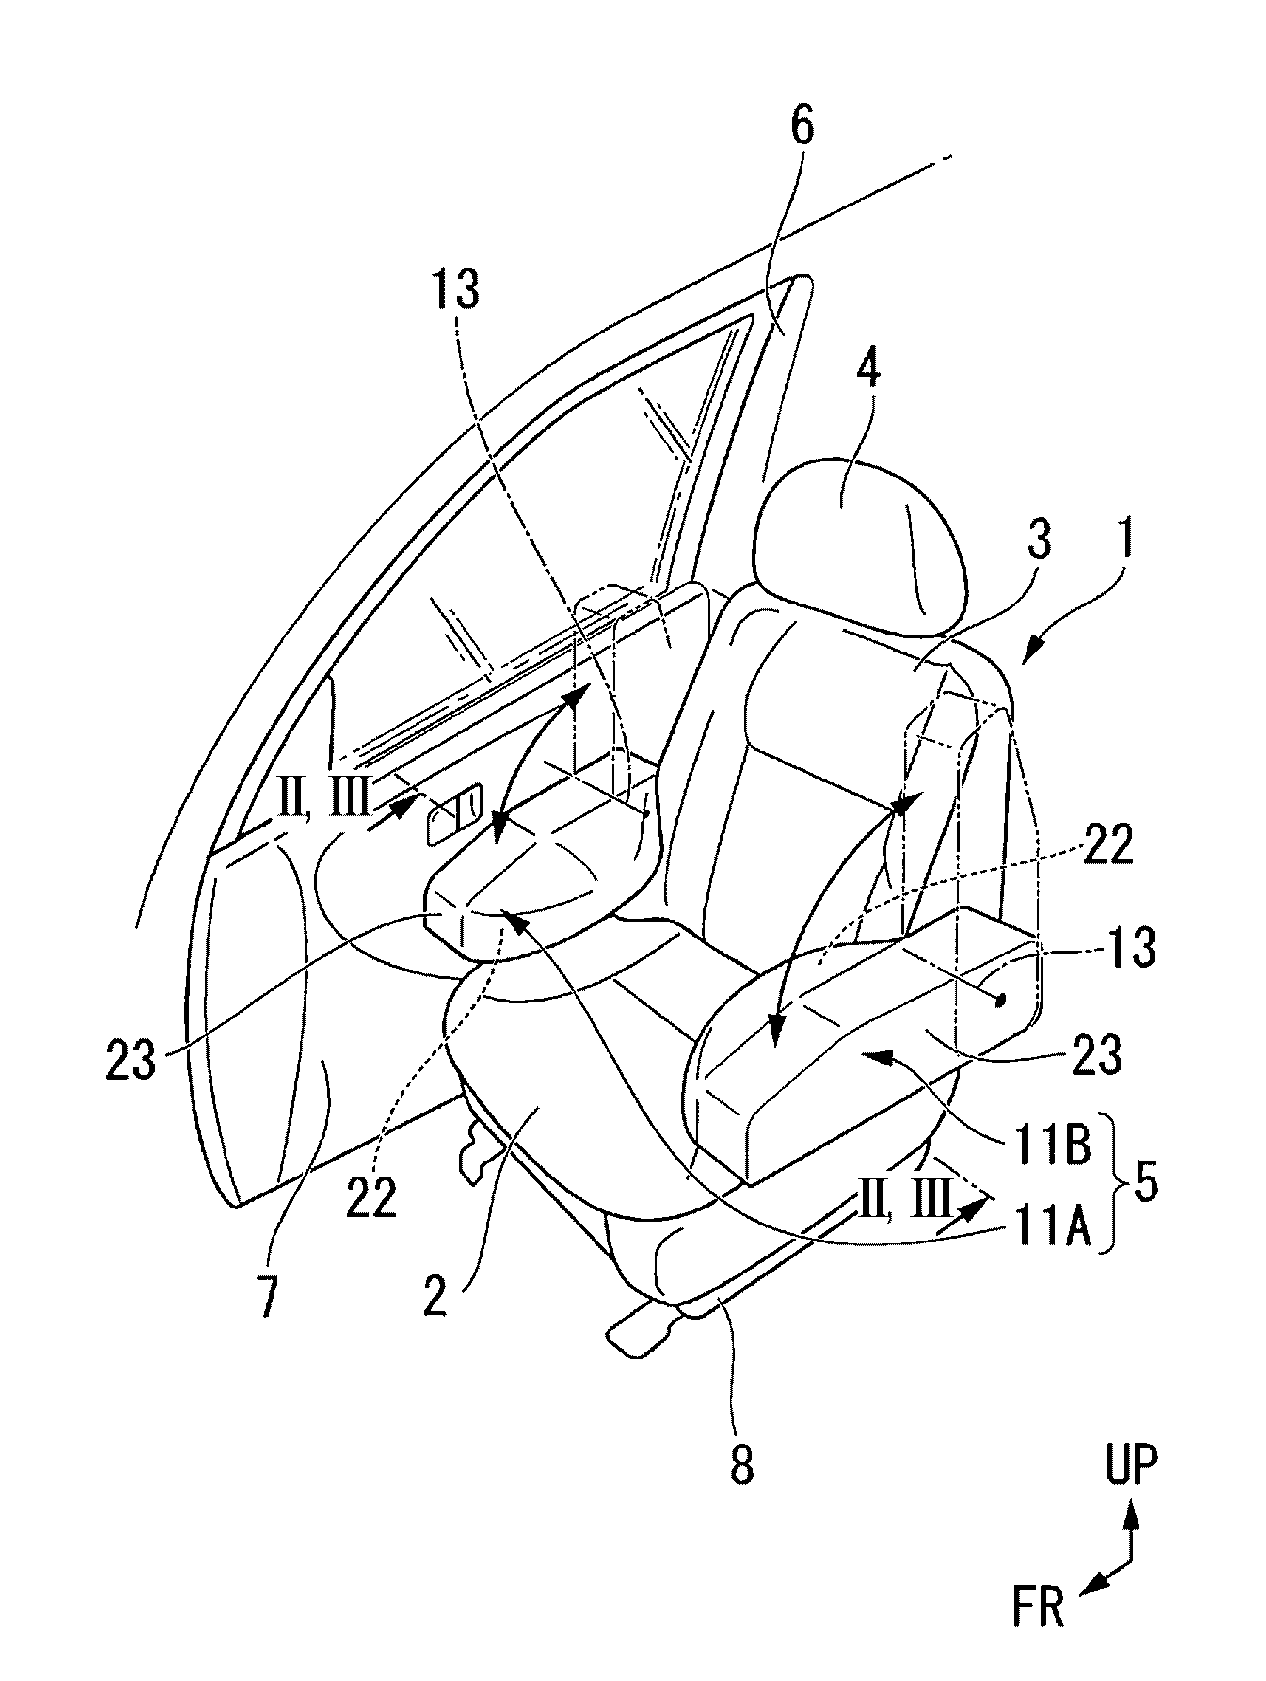 Motor vehicle armrest